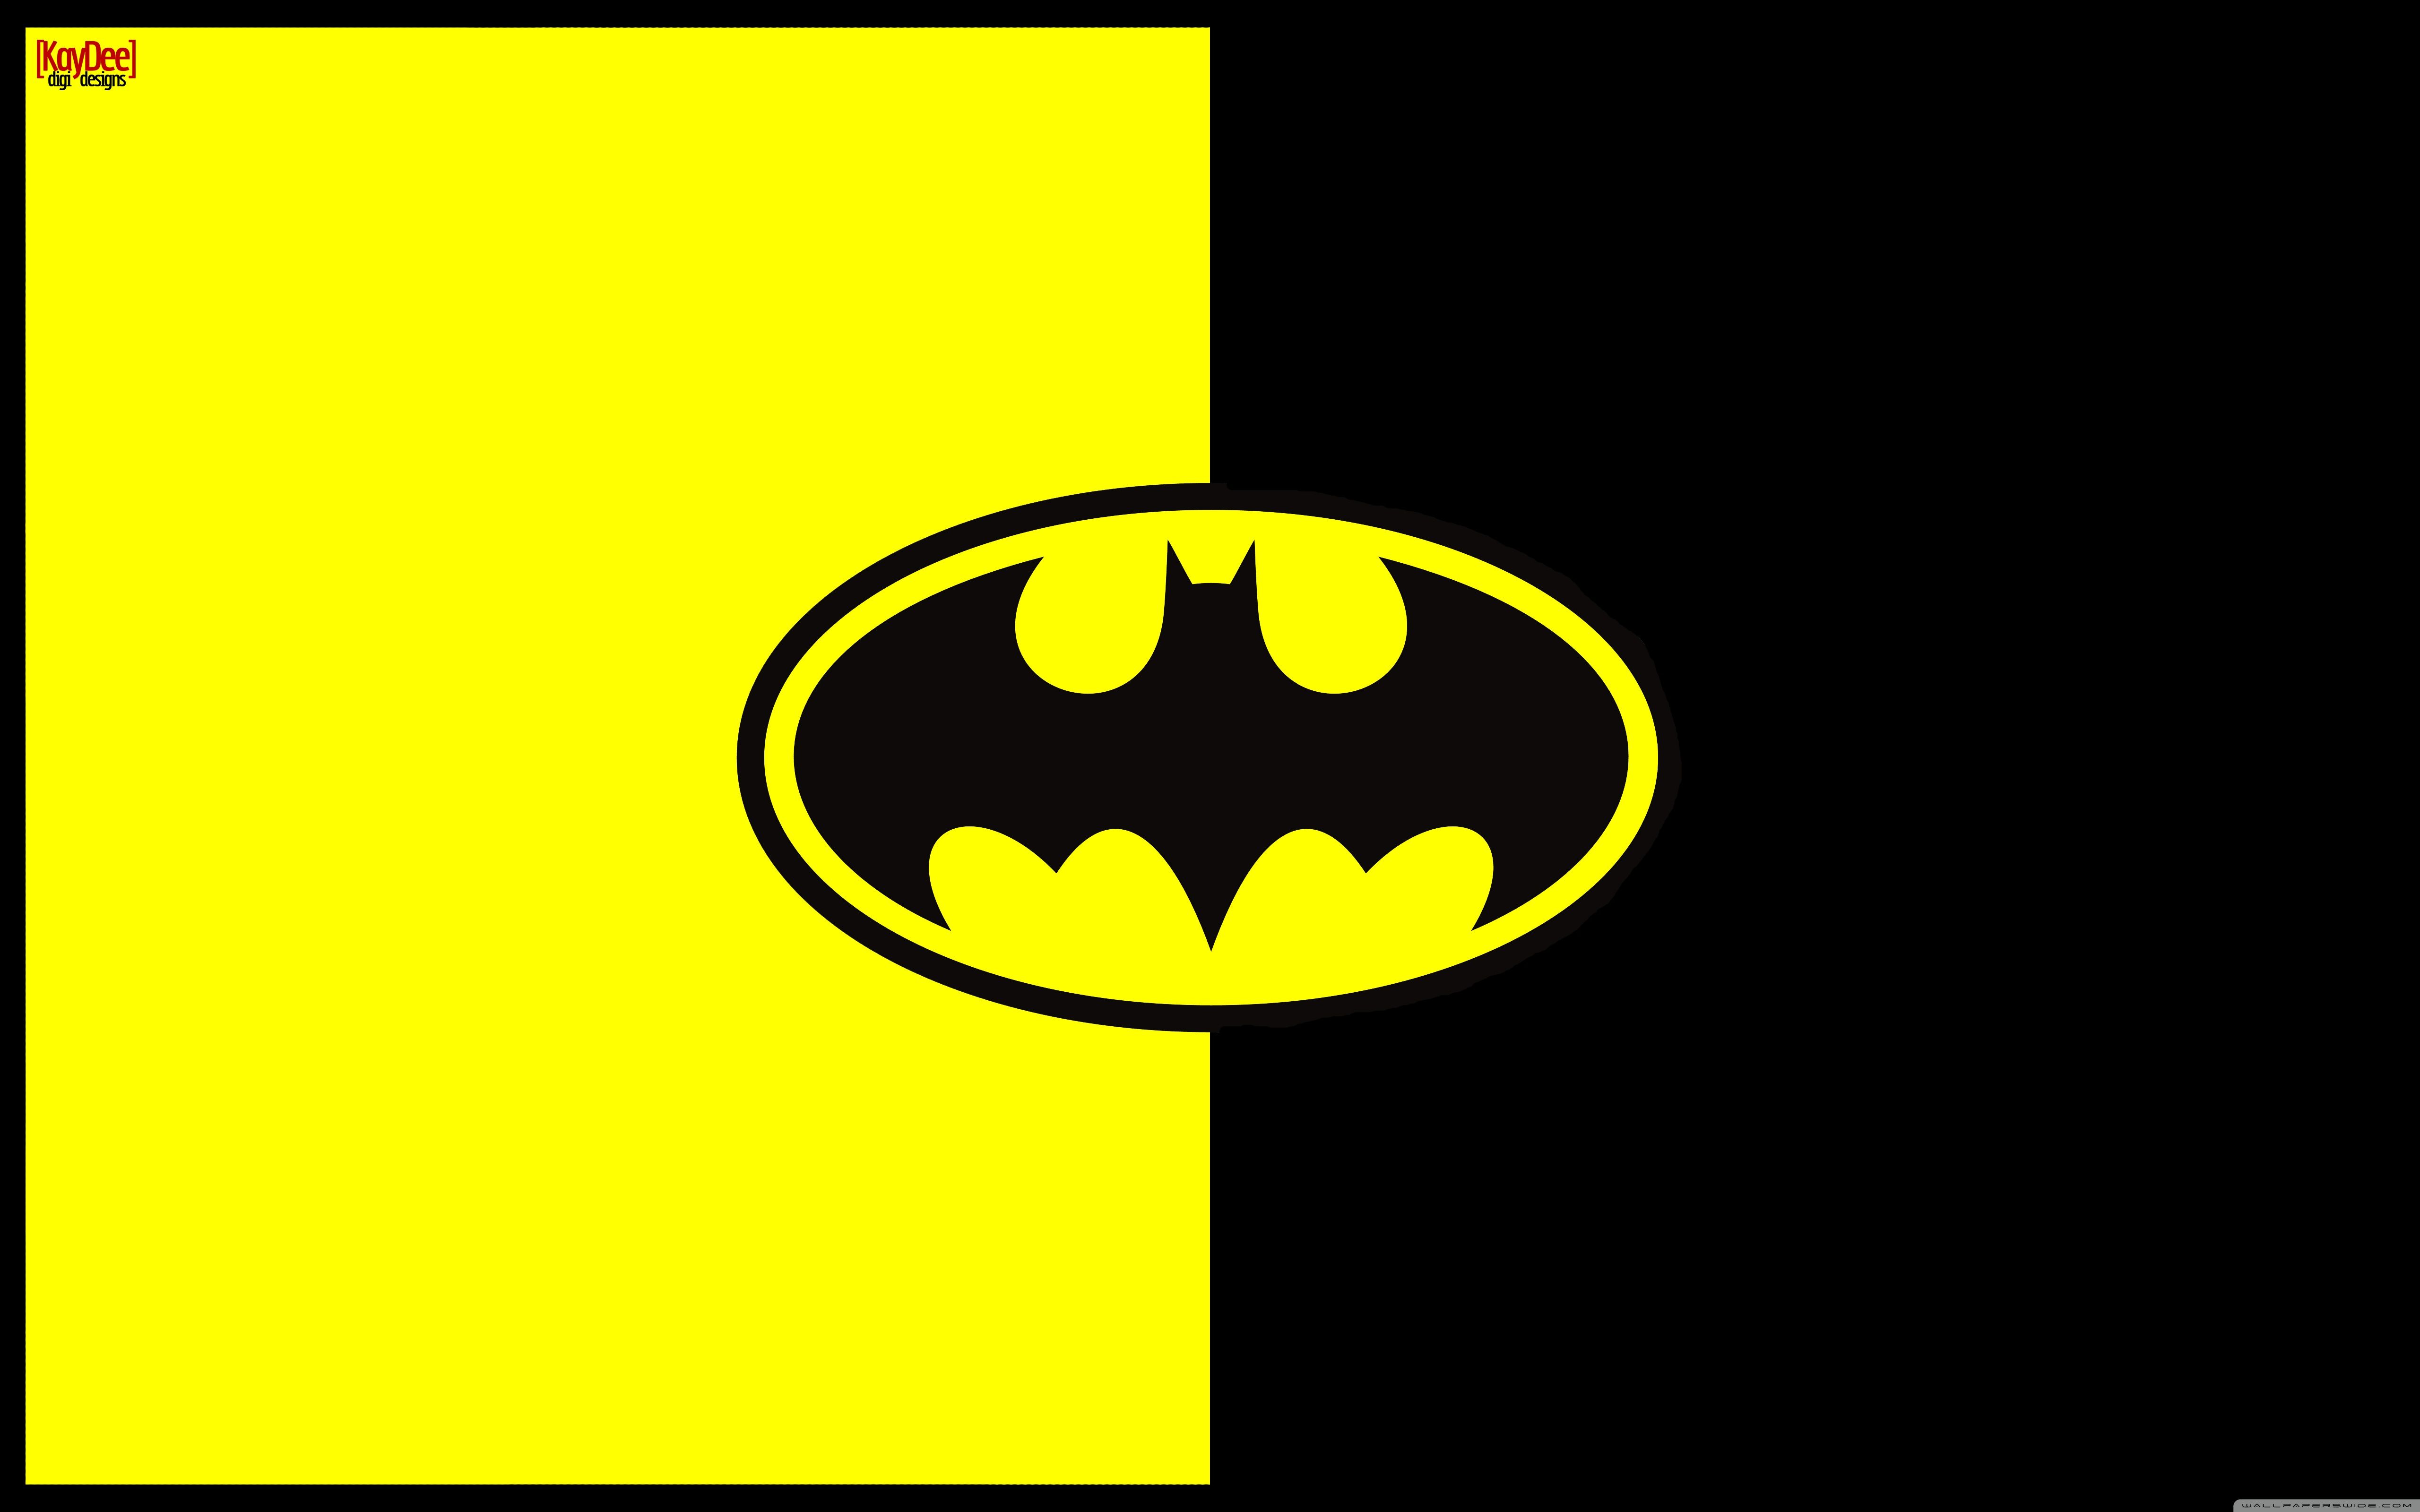 Batman Logo Illustration Wallpaper Full HD [5120x3200] - Free ...